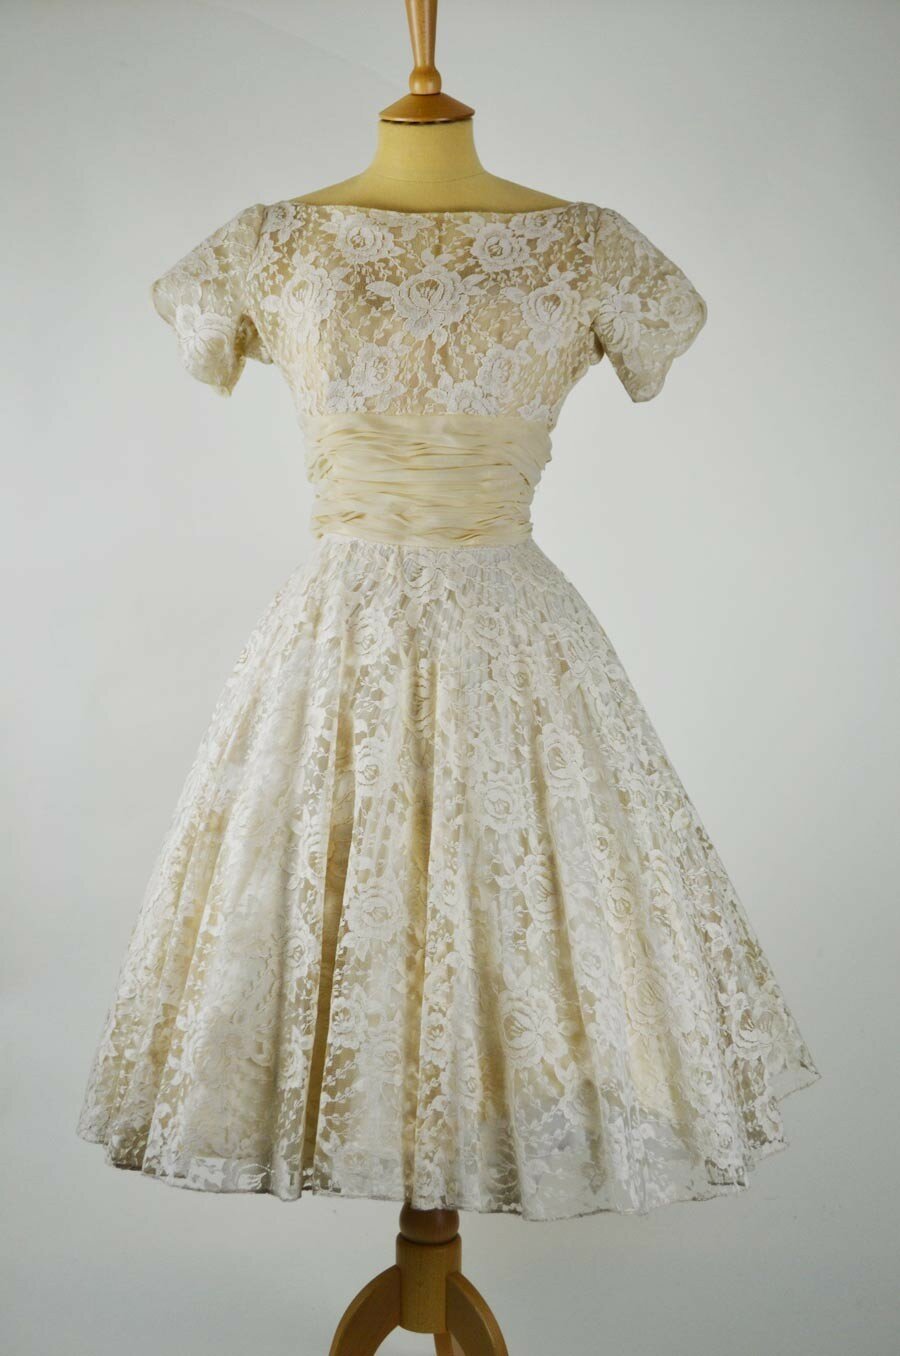 Vintage wedding dresses patterns photo - 3